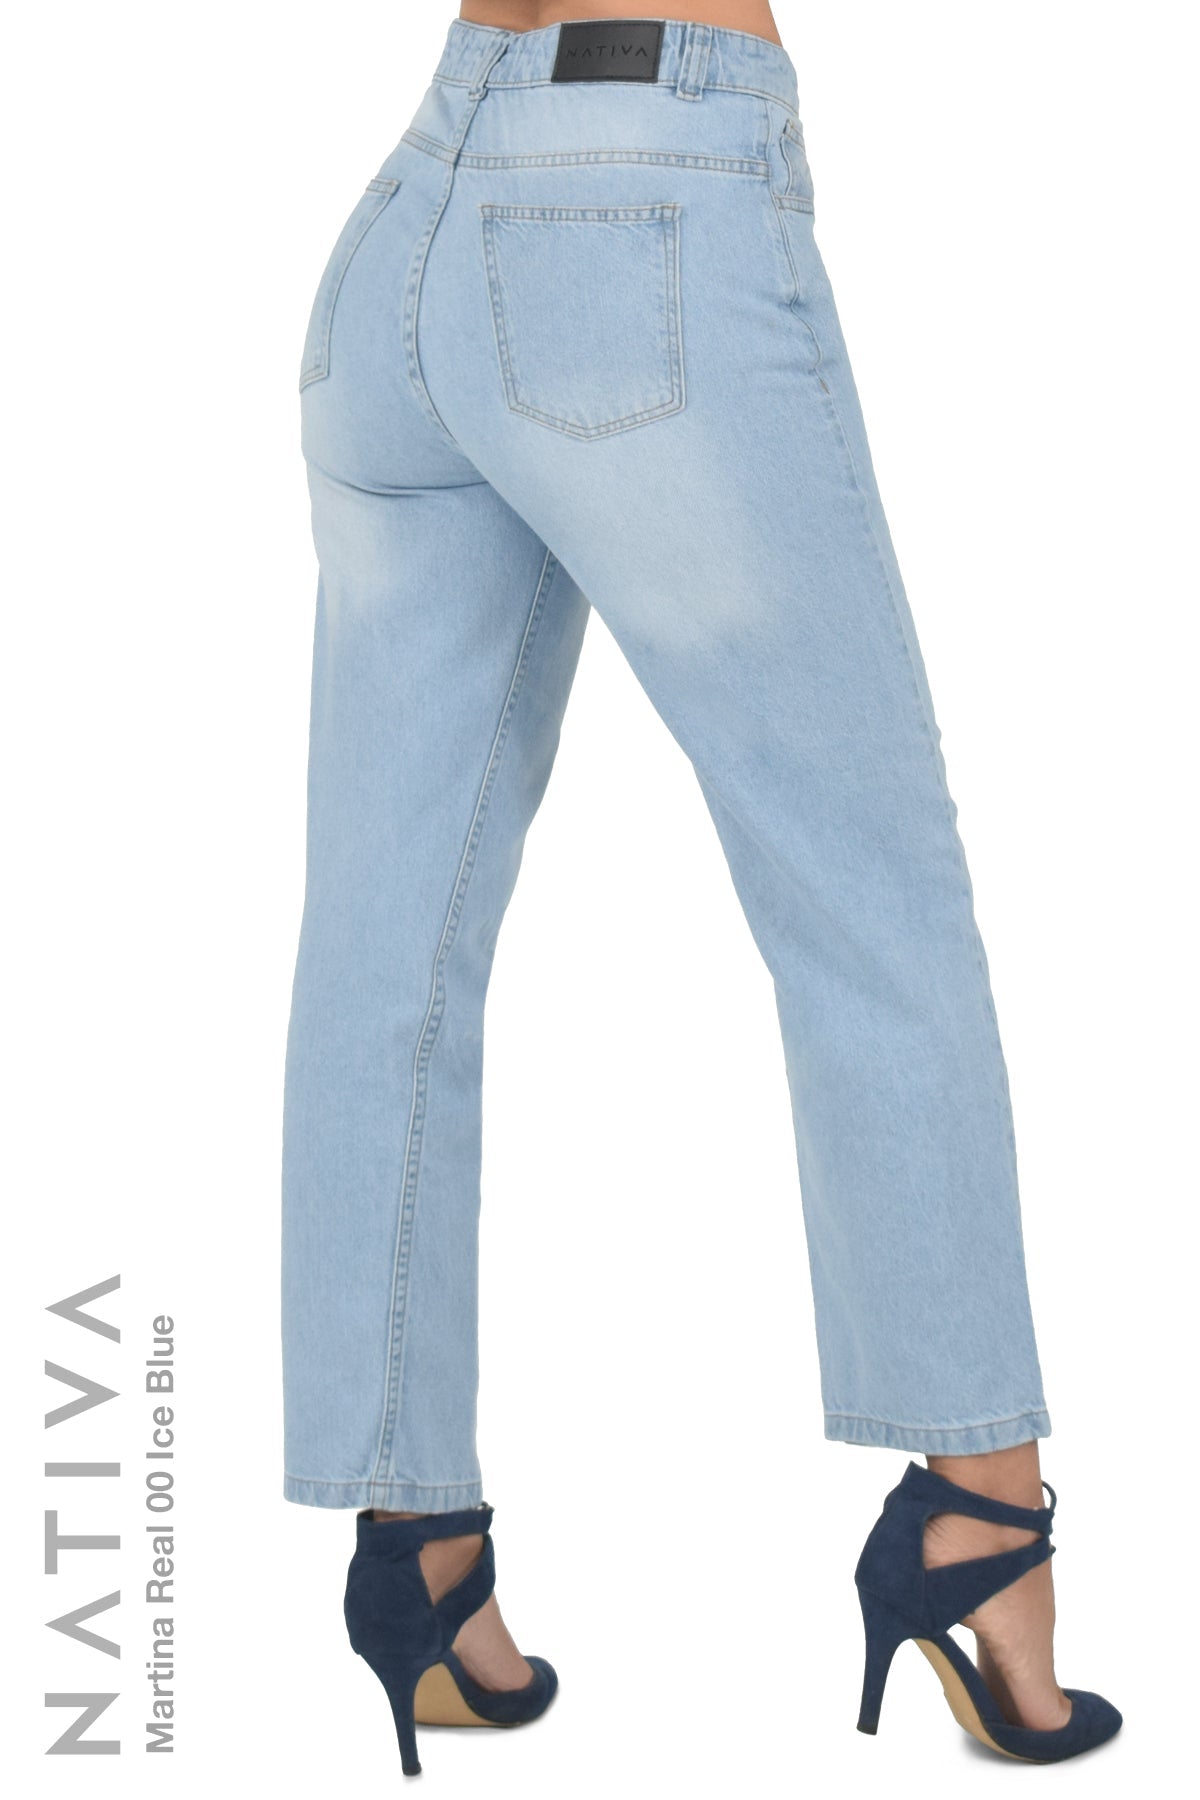 NATIVA, RIGID JEANS. MARTINA REAL 01 ICE BLUE, 100% True Denim Native Virgin Cotton, Ideal Comfort, Hi-Rise Relaxed Mom Jeans